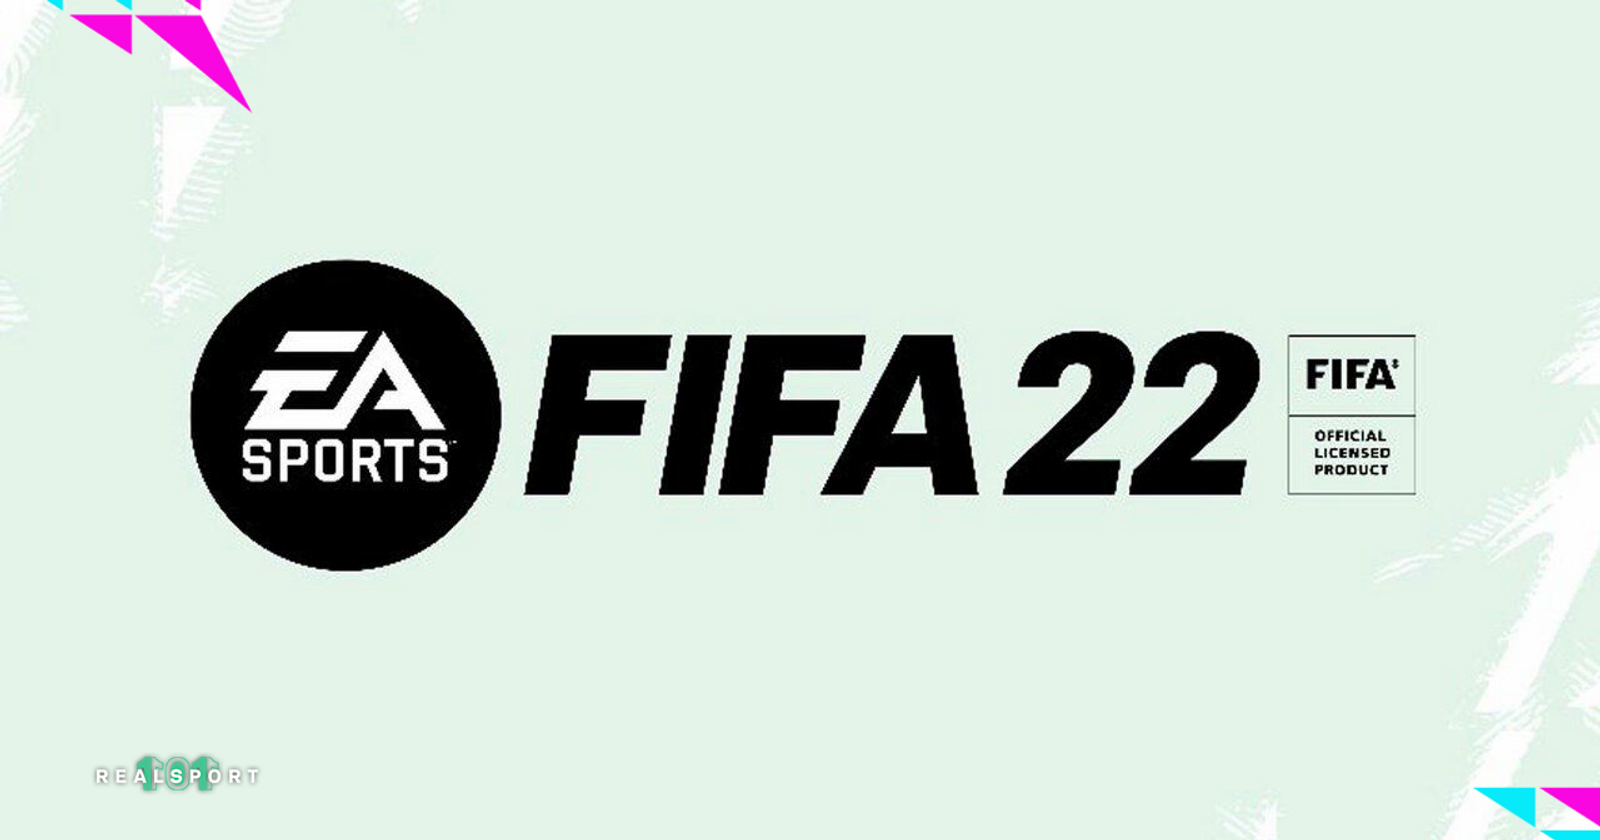 FIFA 22 FUT Web App and FUT Companion App release date confirmed